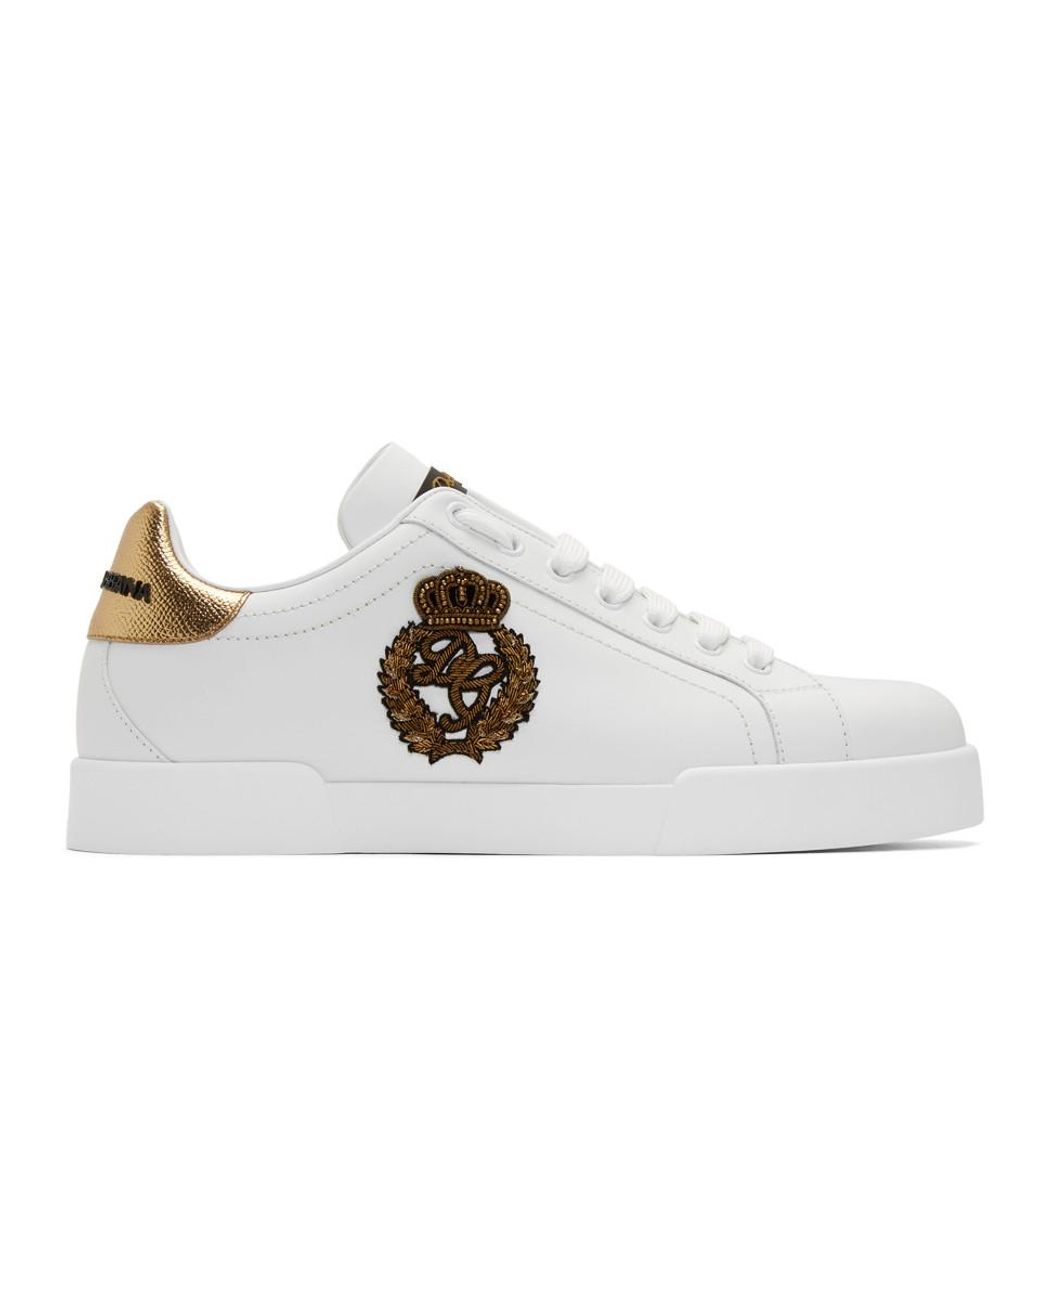 Dolce & Gabbana Leather White And Gold Crest Portofino Sneakers for Men ...